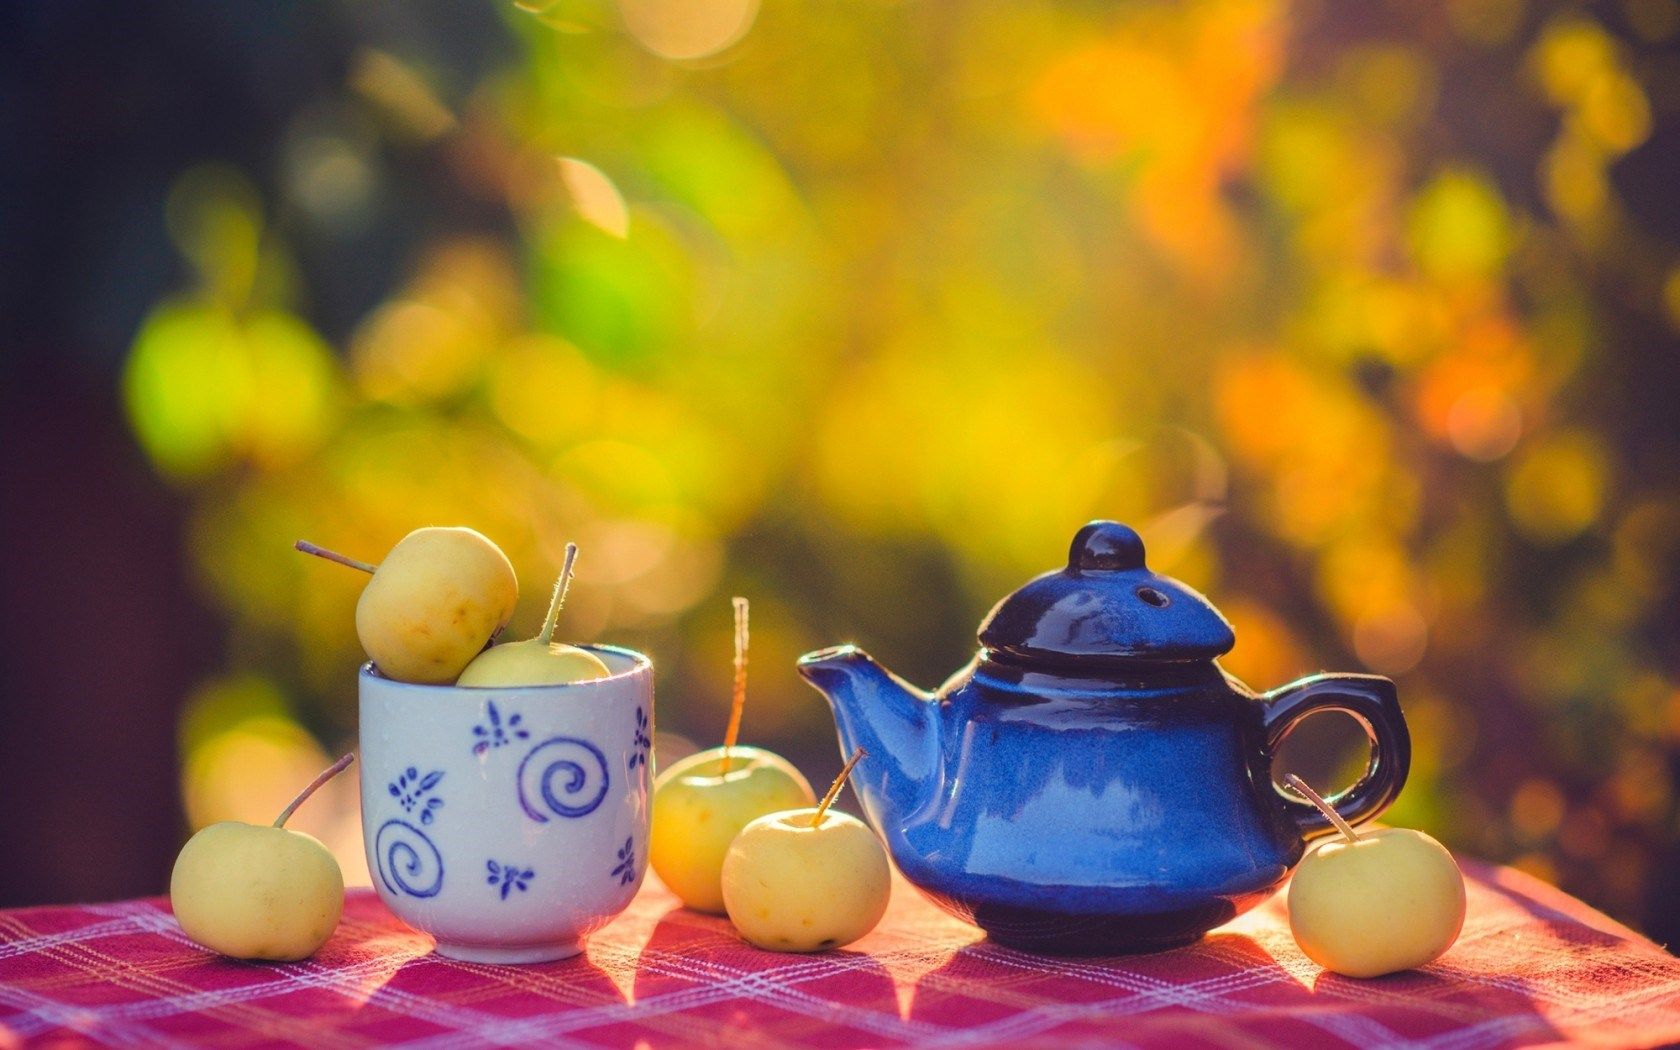 HD wallpaper, Cup, Autumn, Table, Teapot, Apples